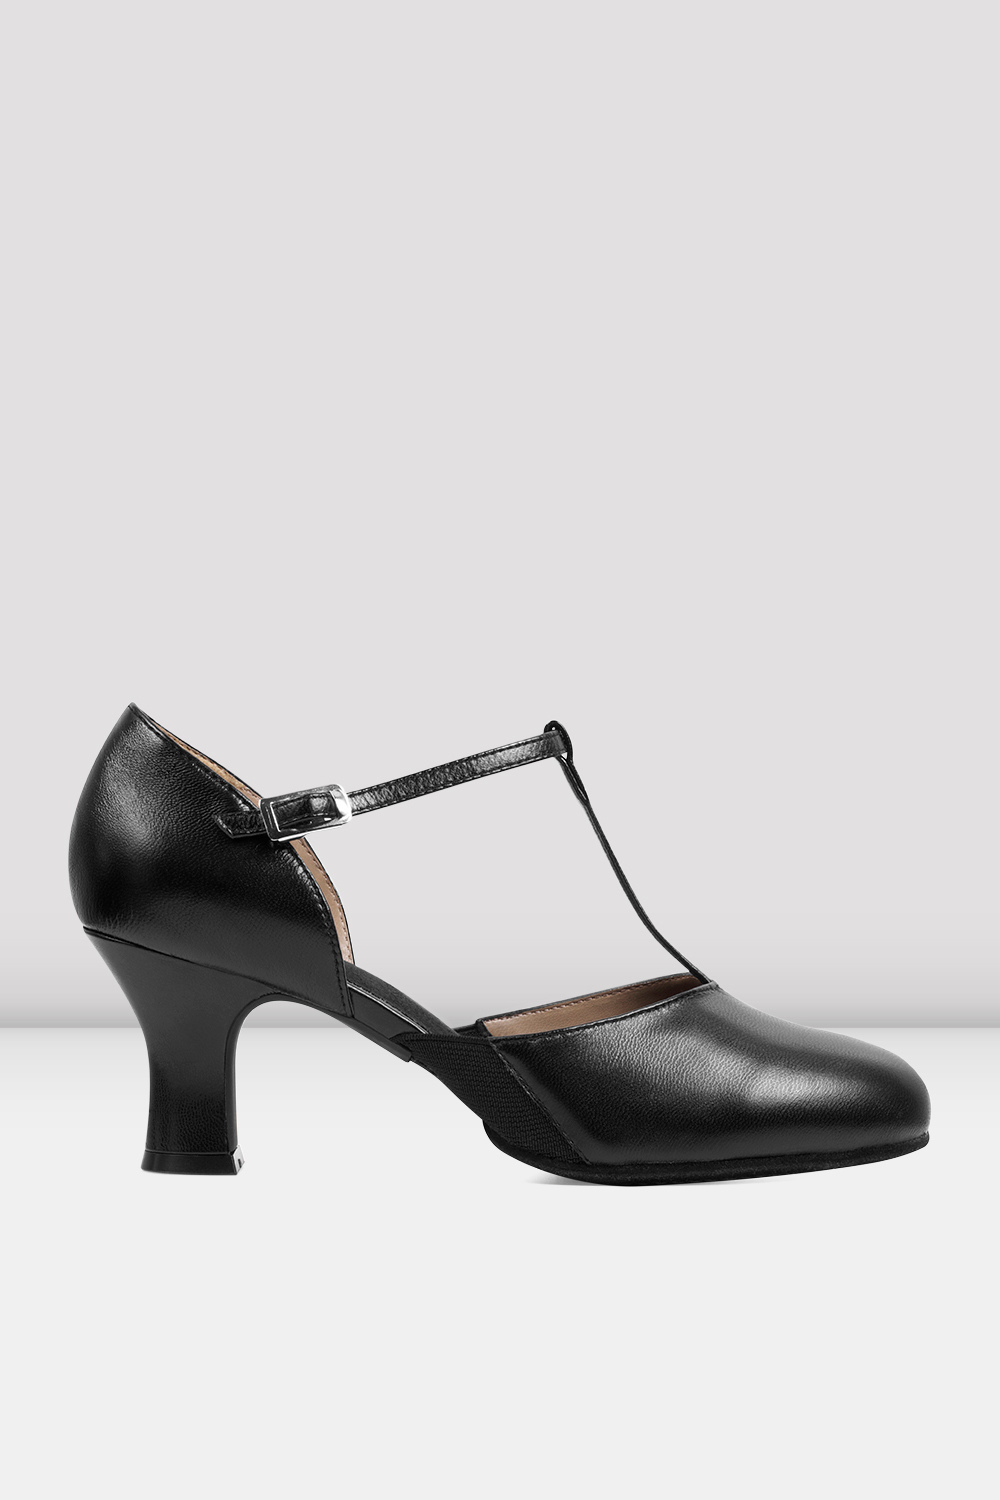 Amazon.com | Weyuysfe Women Pumps Shoes Closed Toe Heels for Women Party  Wedding Fashion Shoes Dress Shoes for Women Black White High Heels 2.5 Inch  | Pumps